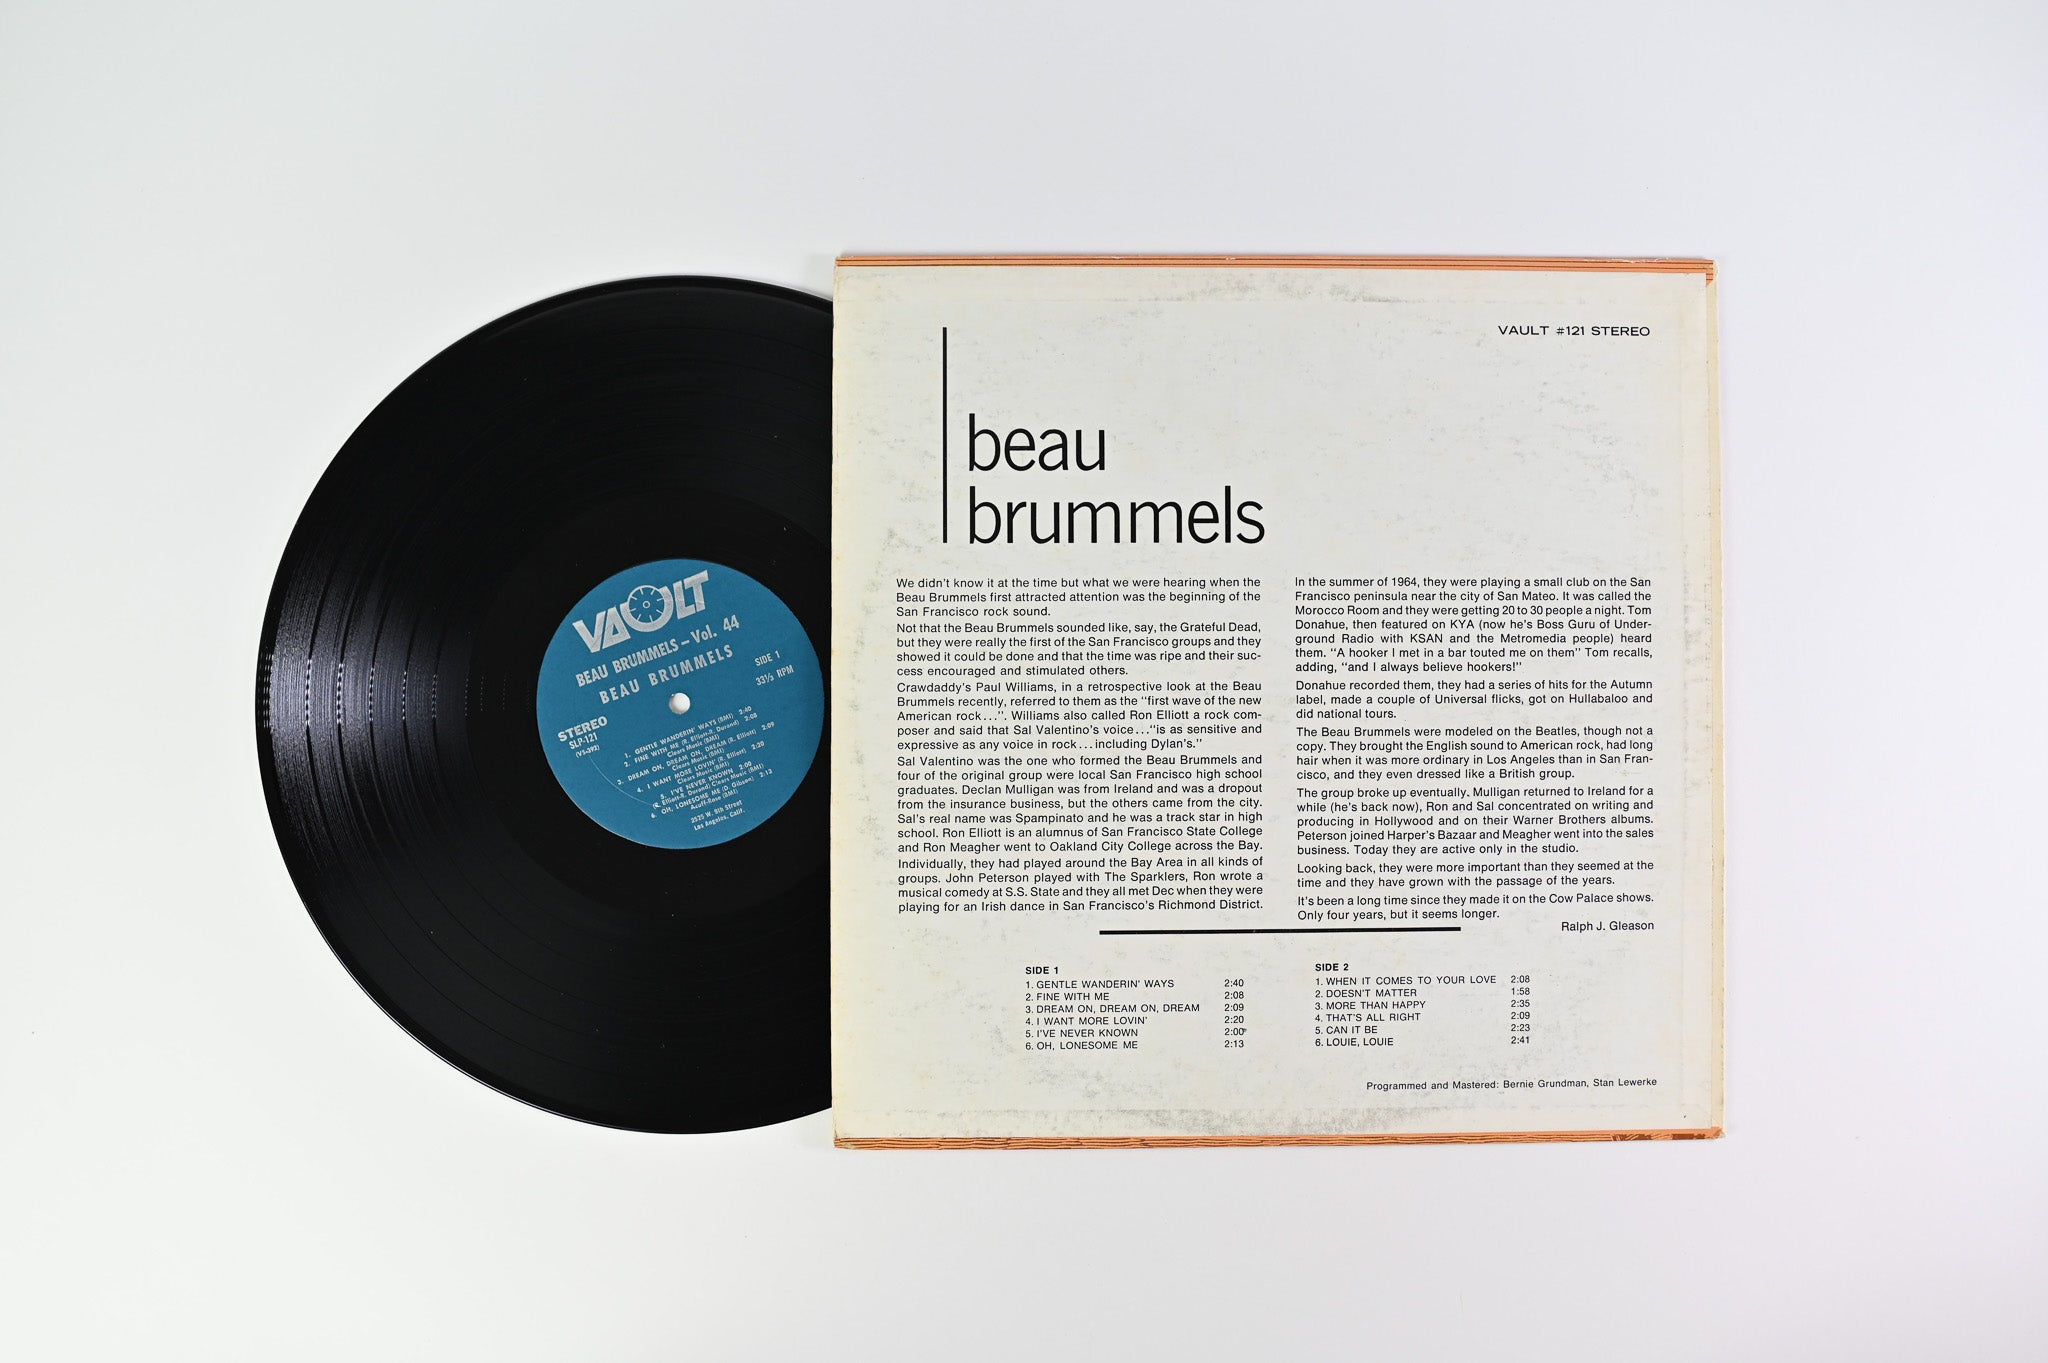 The Beau Brummels - Vol. 44 on Vault